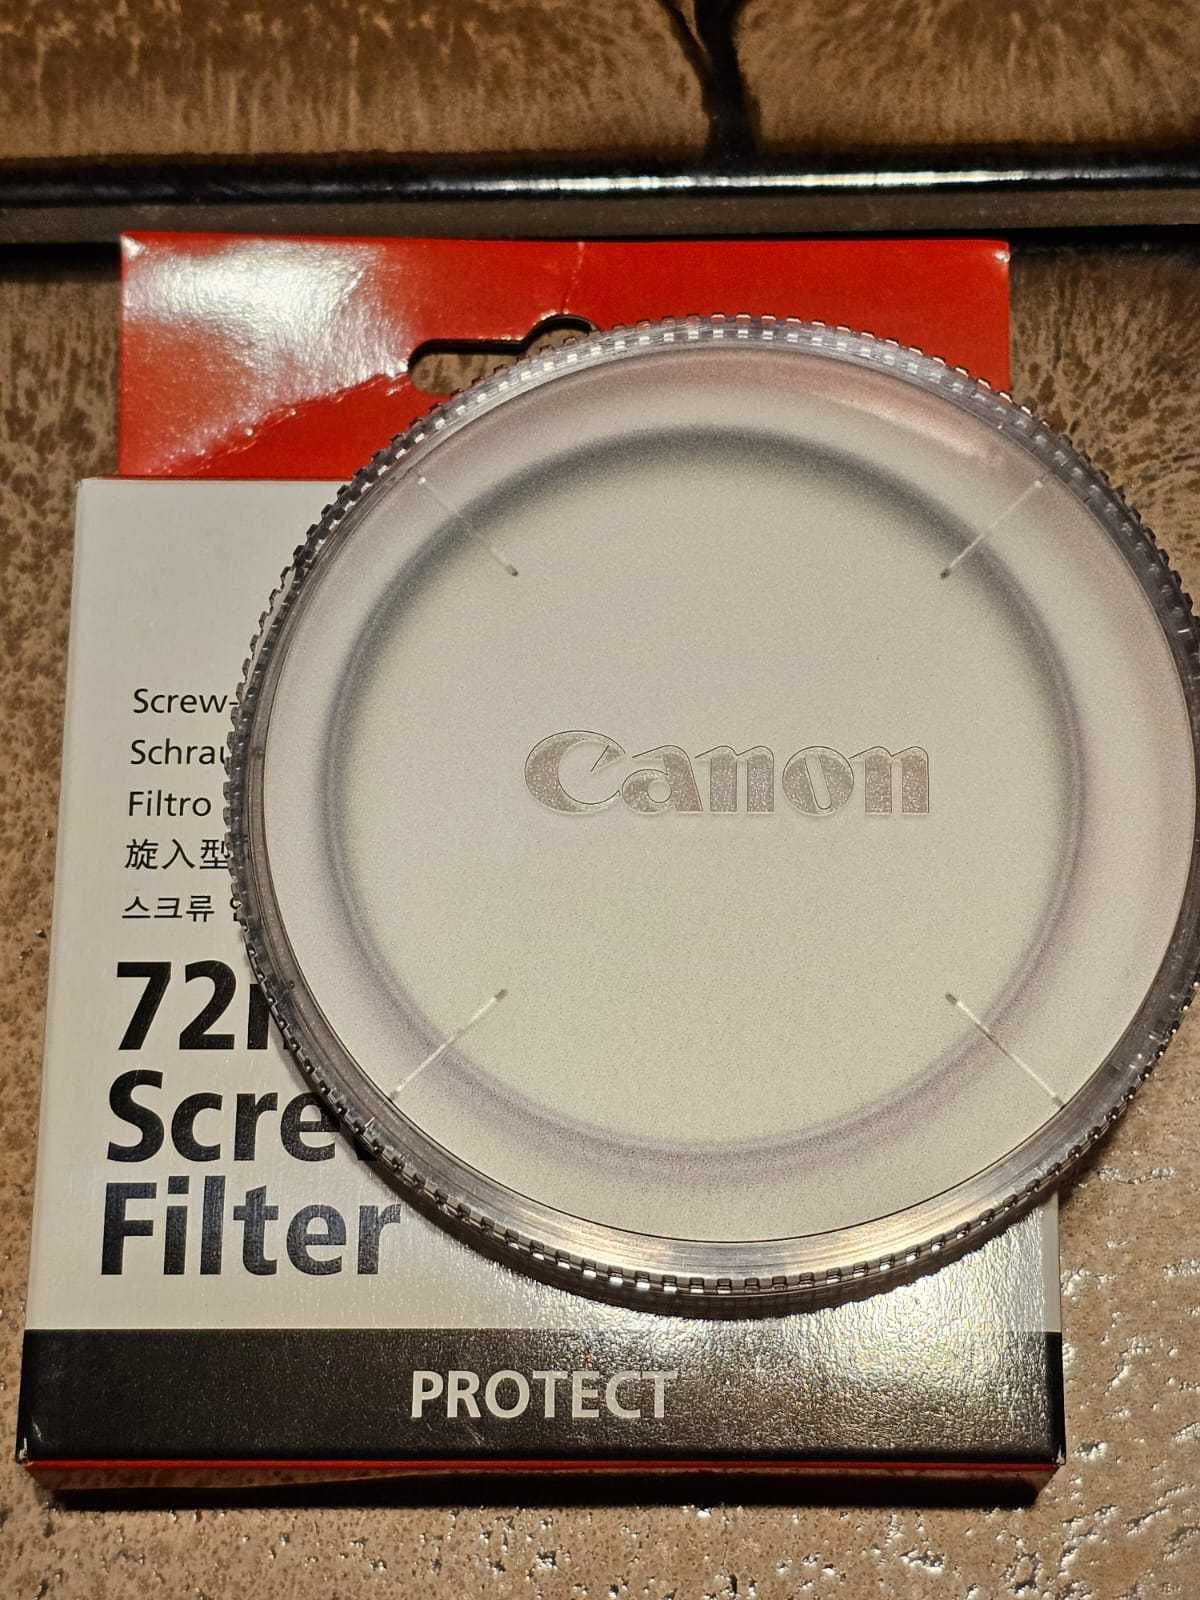 Vand filtu Canon protectie 72mm